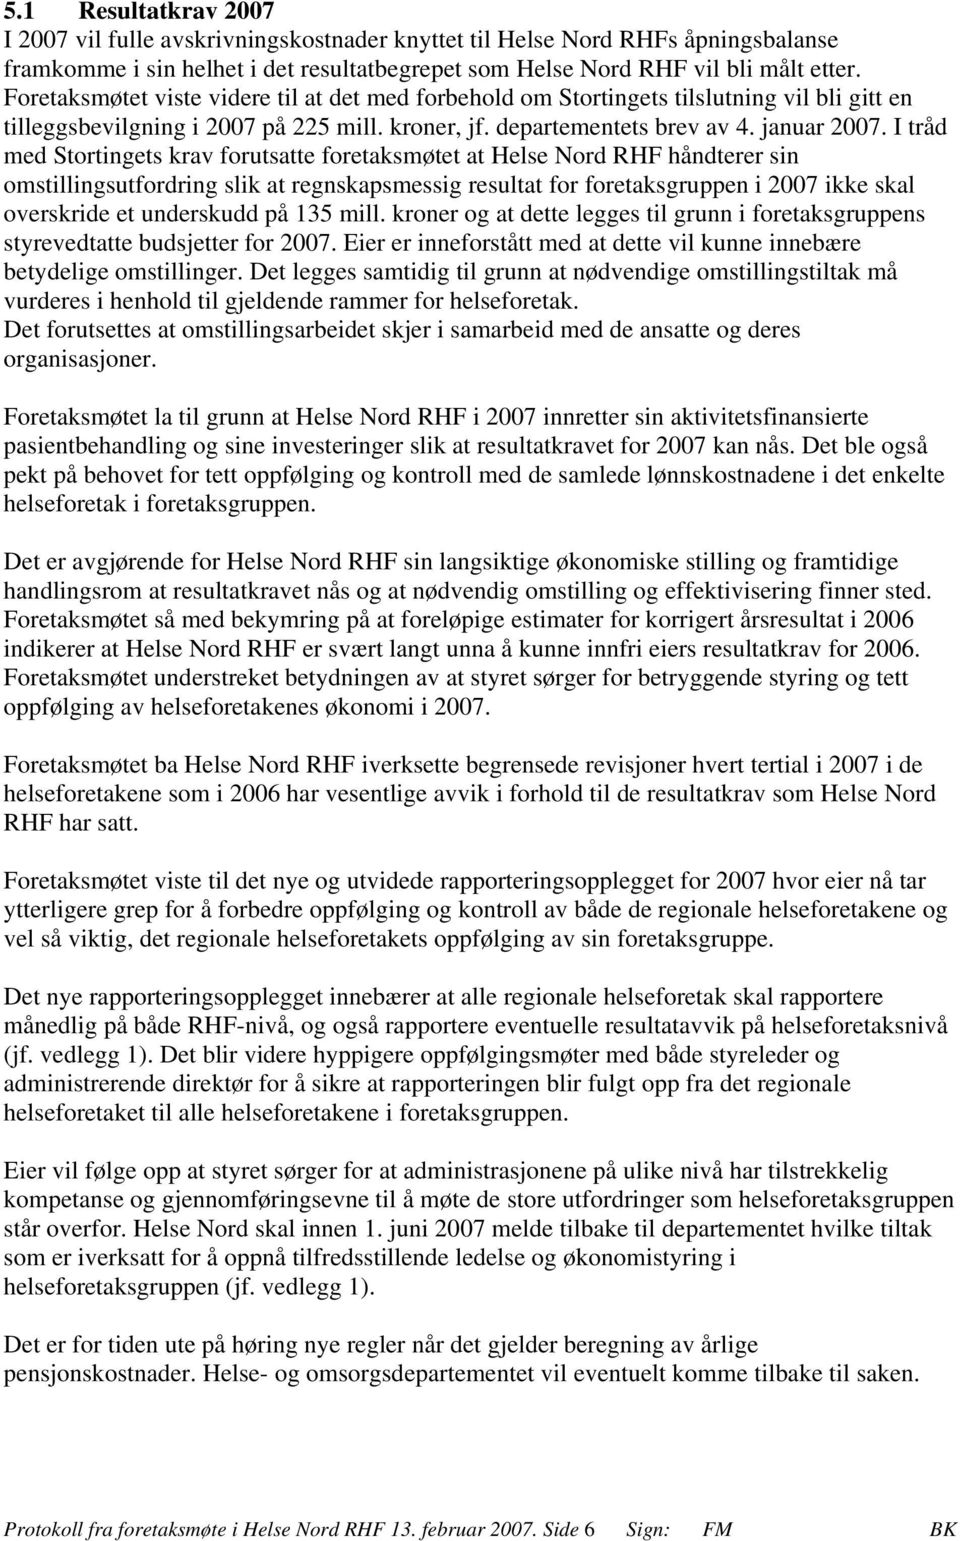 I tråd med Stortingets krav forutsatte foretaksmøtet at Helse Nord RHF håndterer sin omstillingsutfordring slik at regnskapsmessig resultat for foretaksgruppen i 2007 ikke skal overskride et